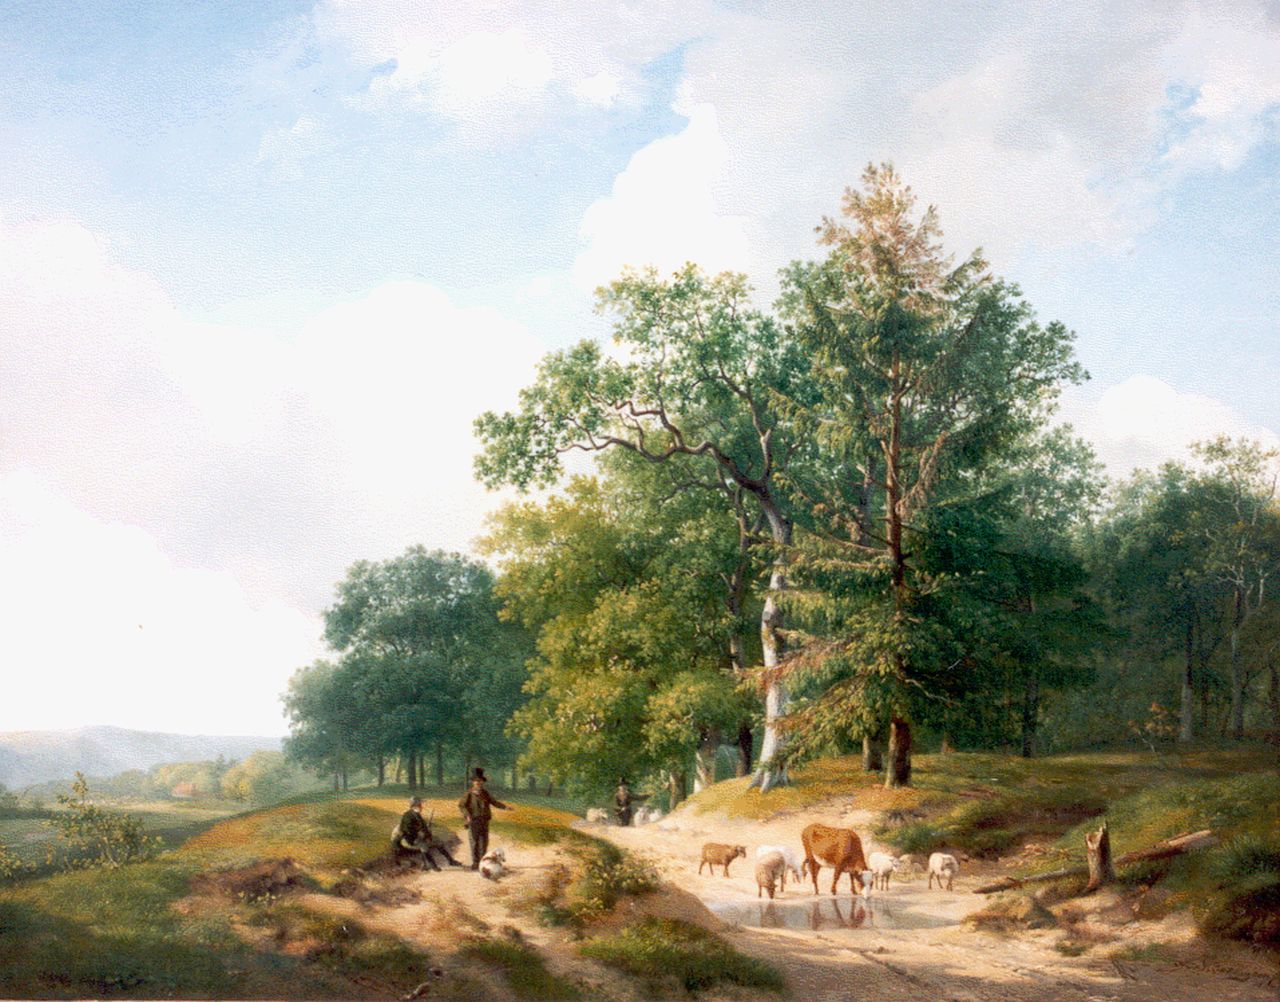 Sande Bakhuyzen H. van de | Hendrikus van de Sande Bakhuyzen, A farmer with cattle in a wooded landscape, Öl auf Holz 51,4 x 62,2 cm, signed l.r. und dated 1825